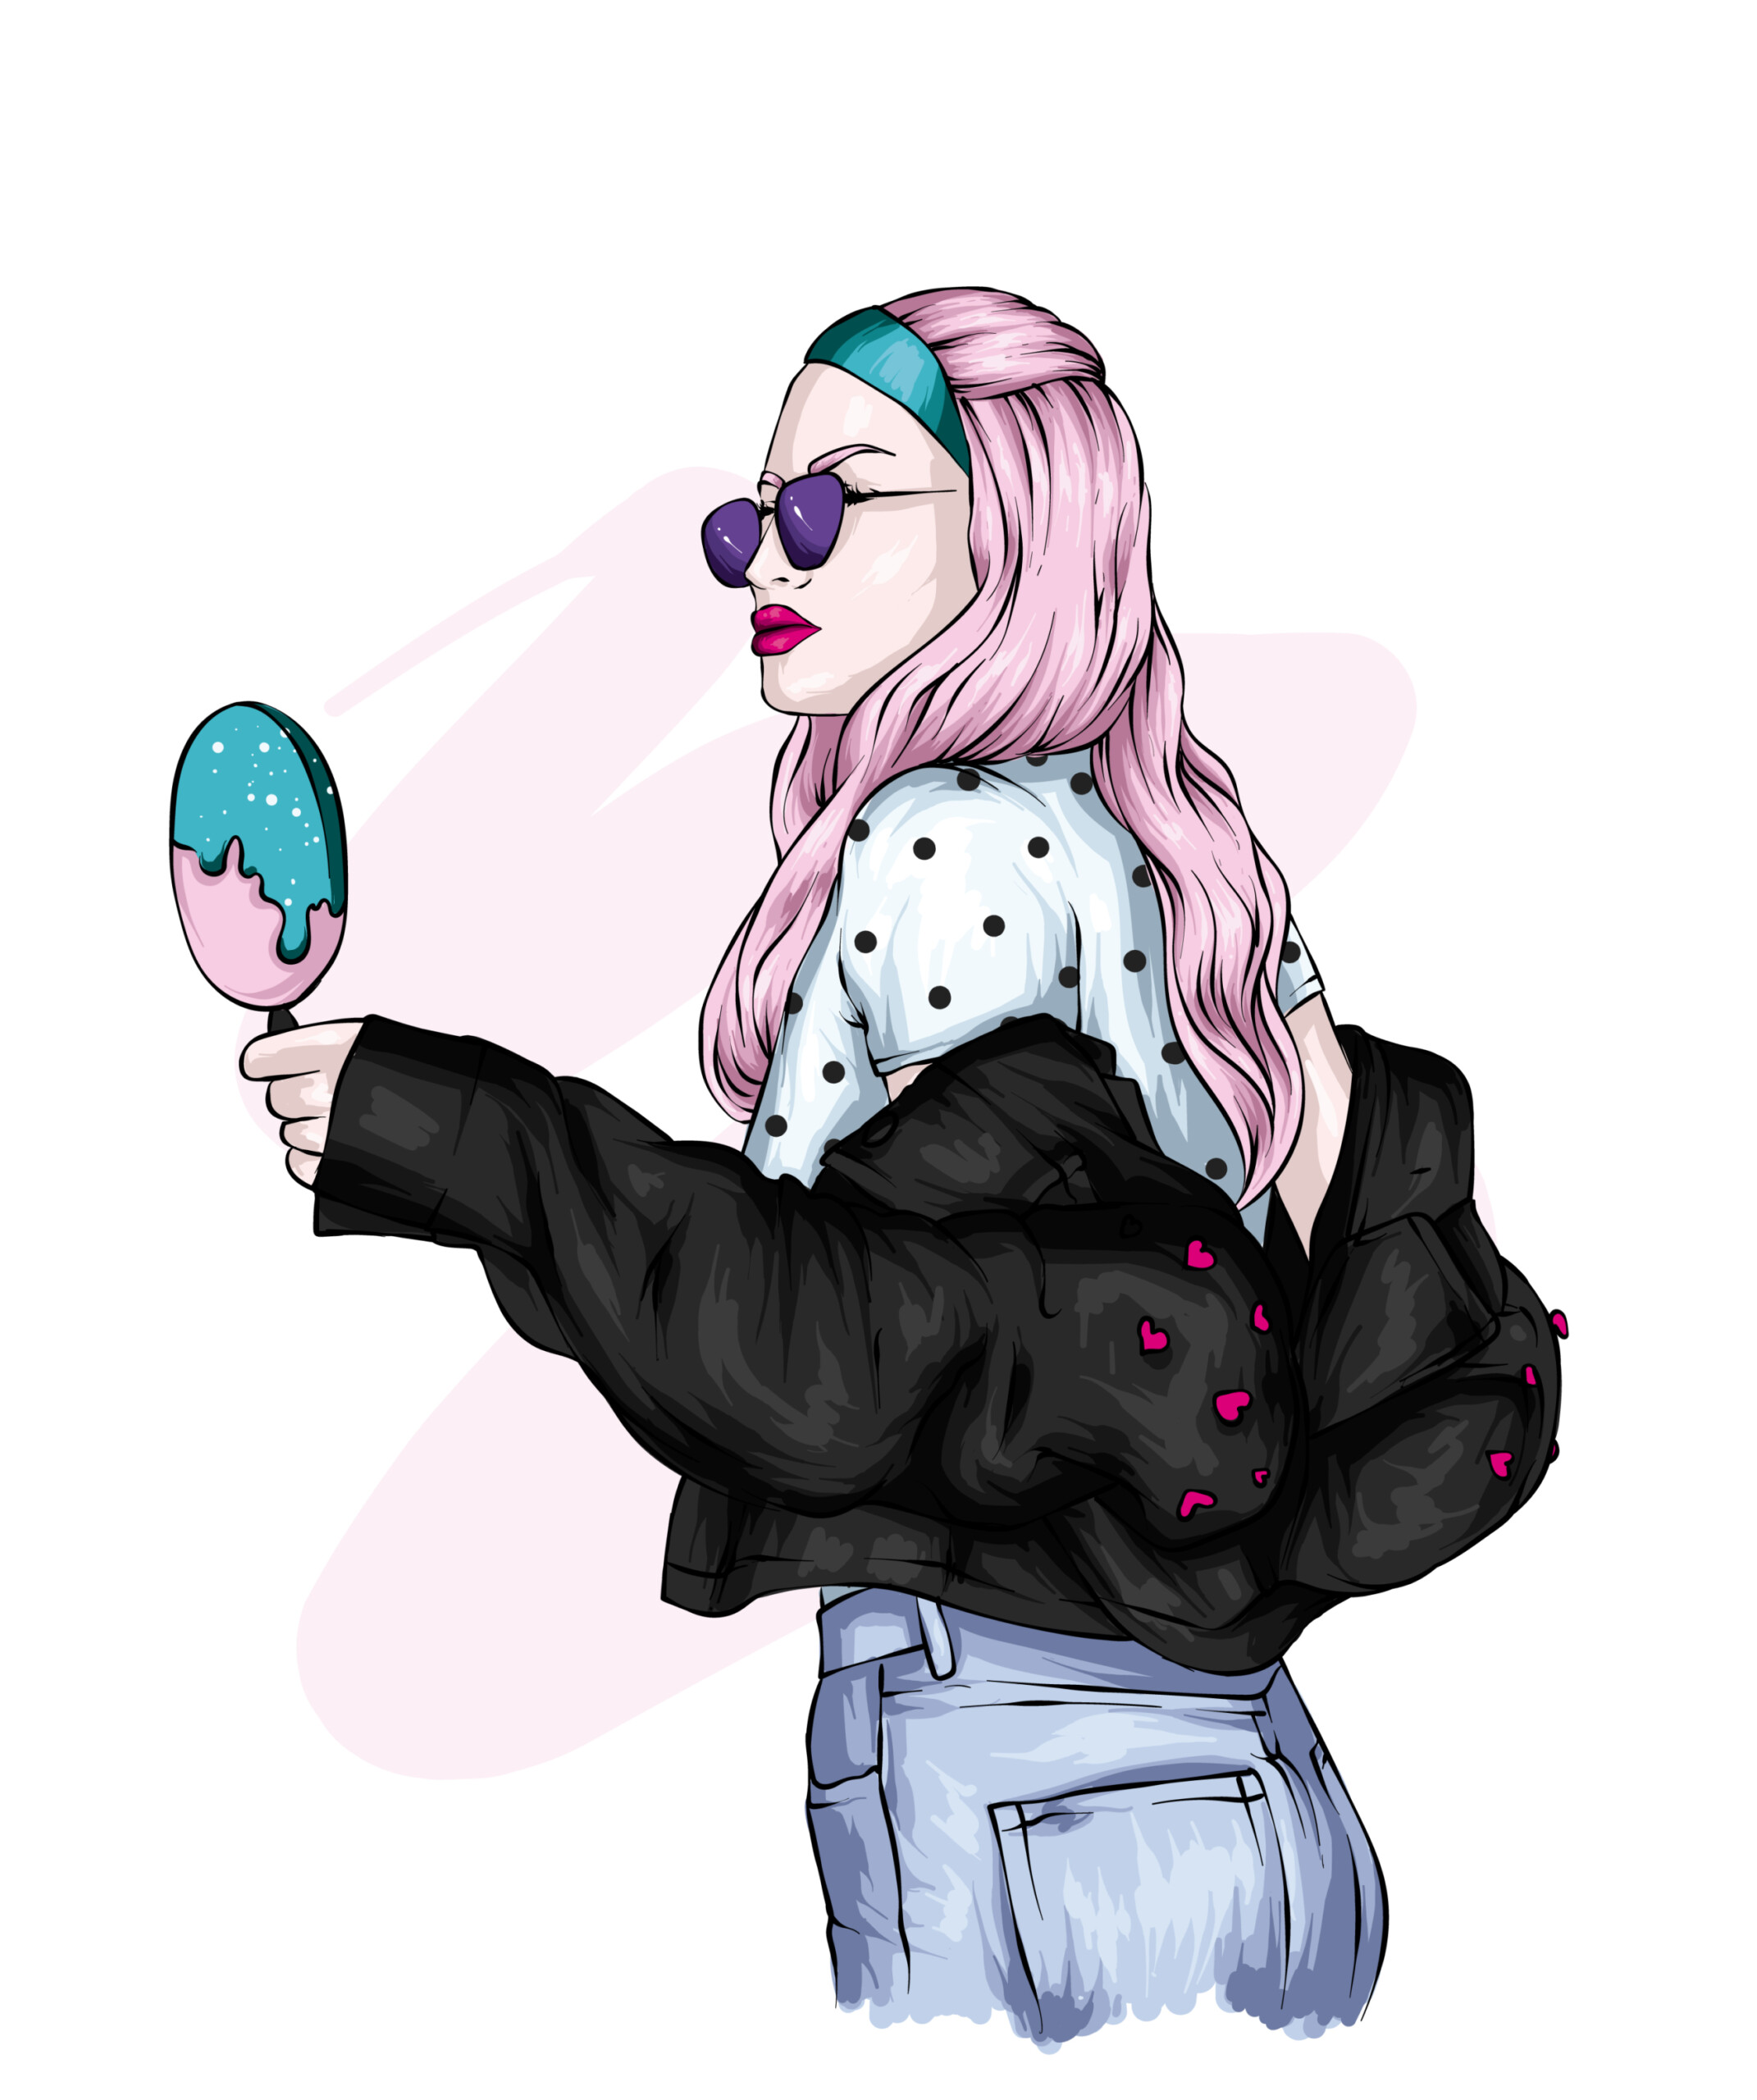 Girl with Ice Cream - Original image